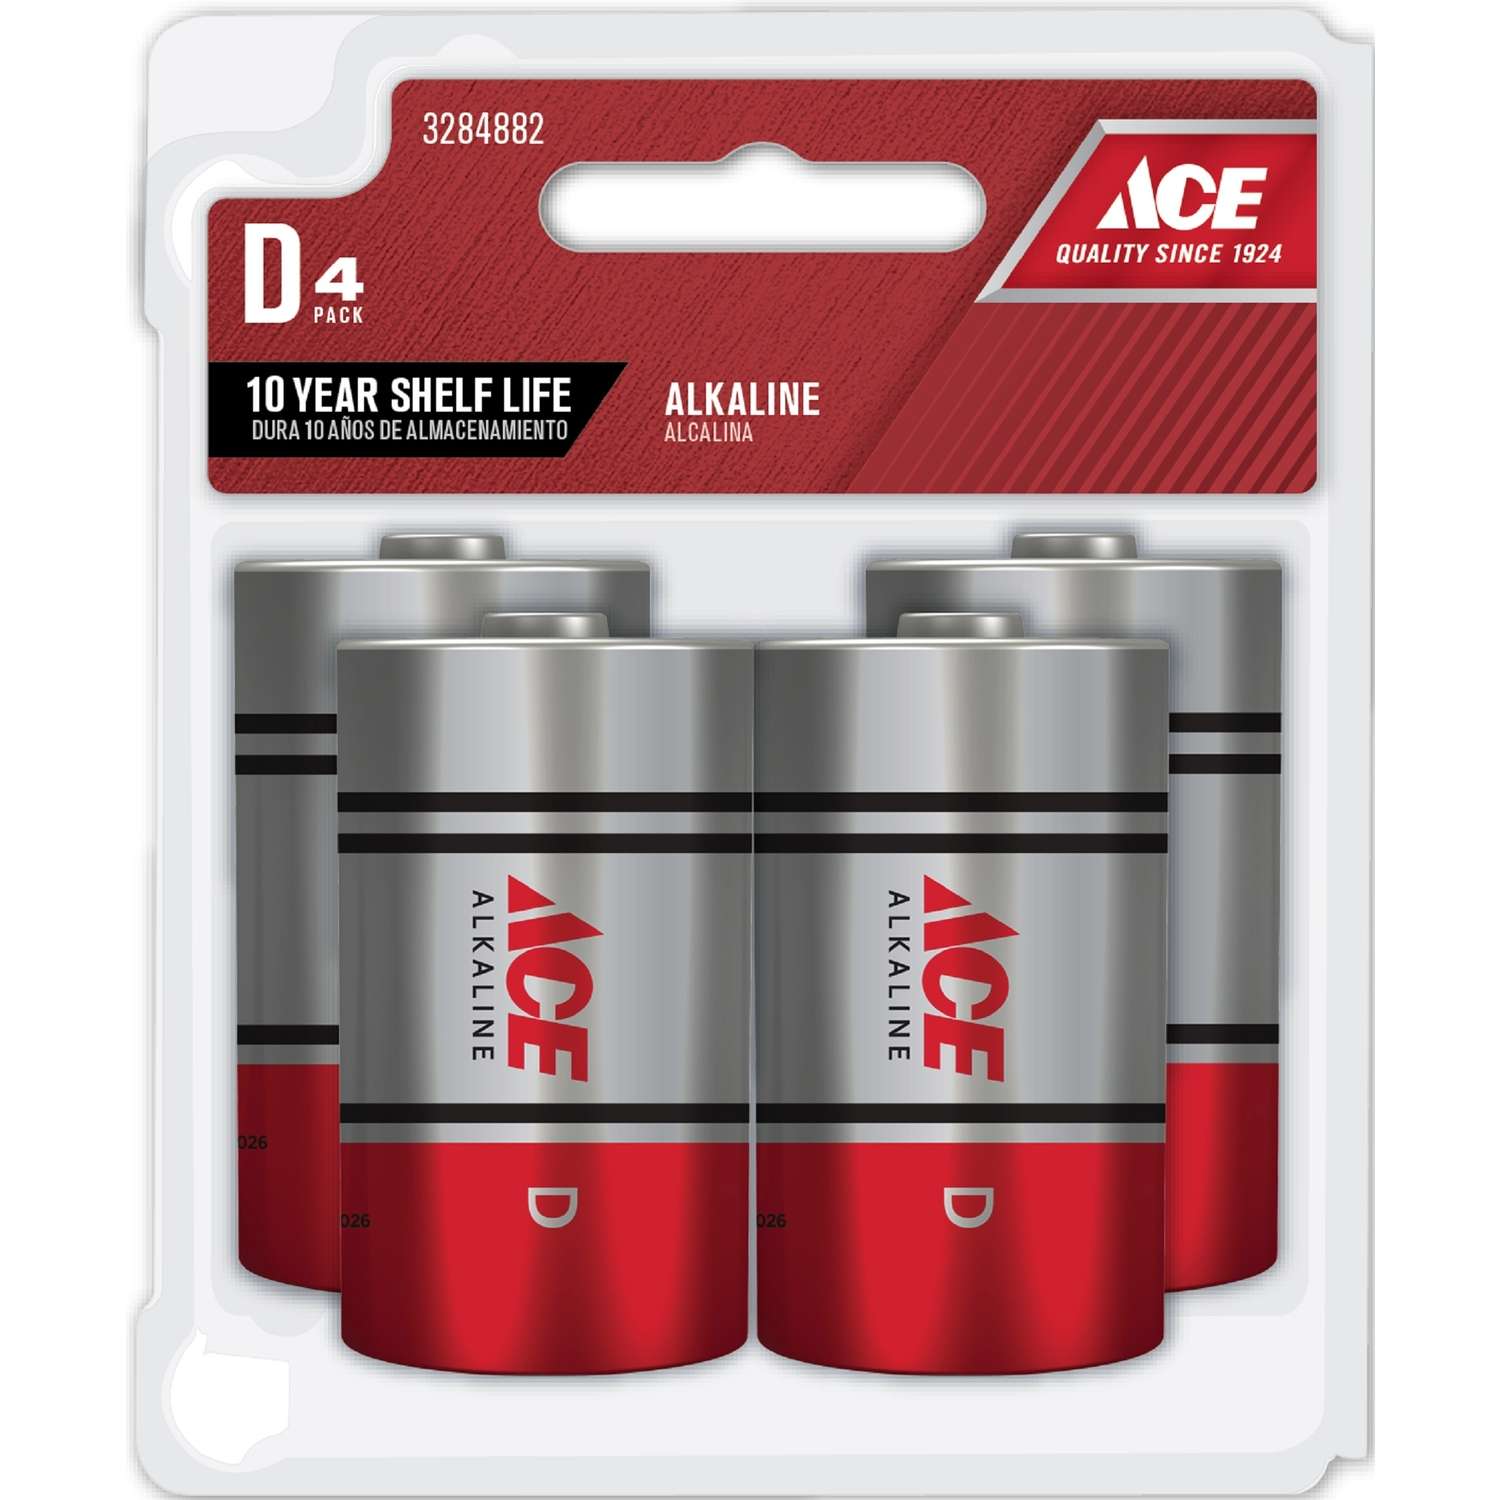 Ace D Alkaline Batteries 4 pk Carded - Ace Hardware